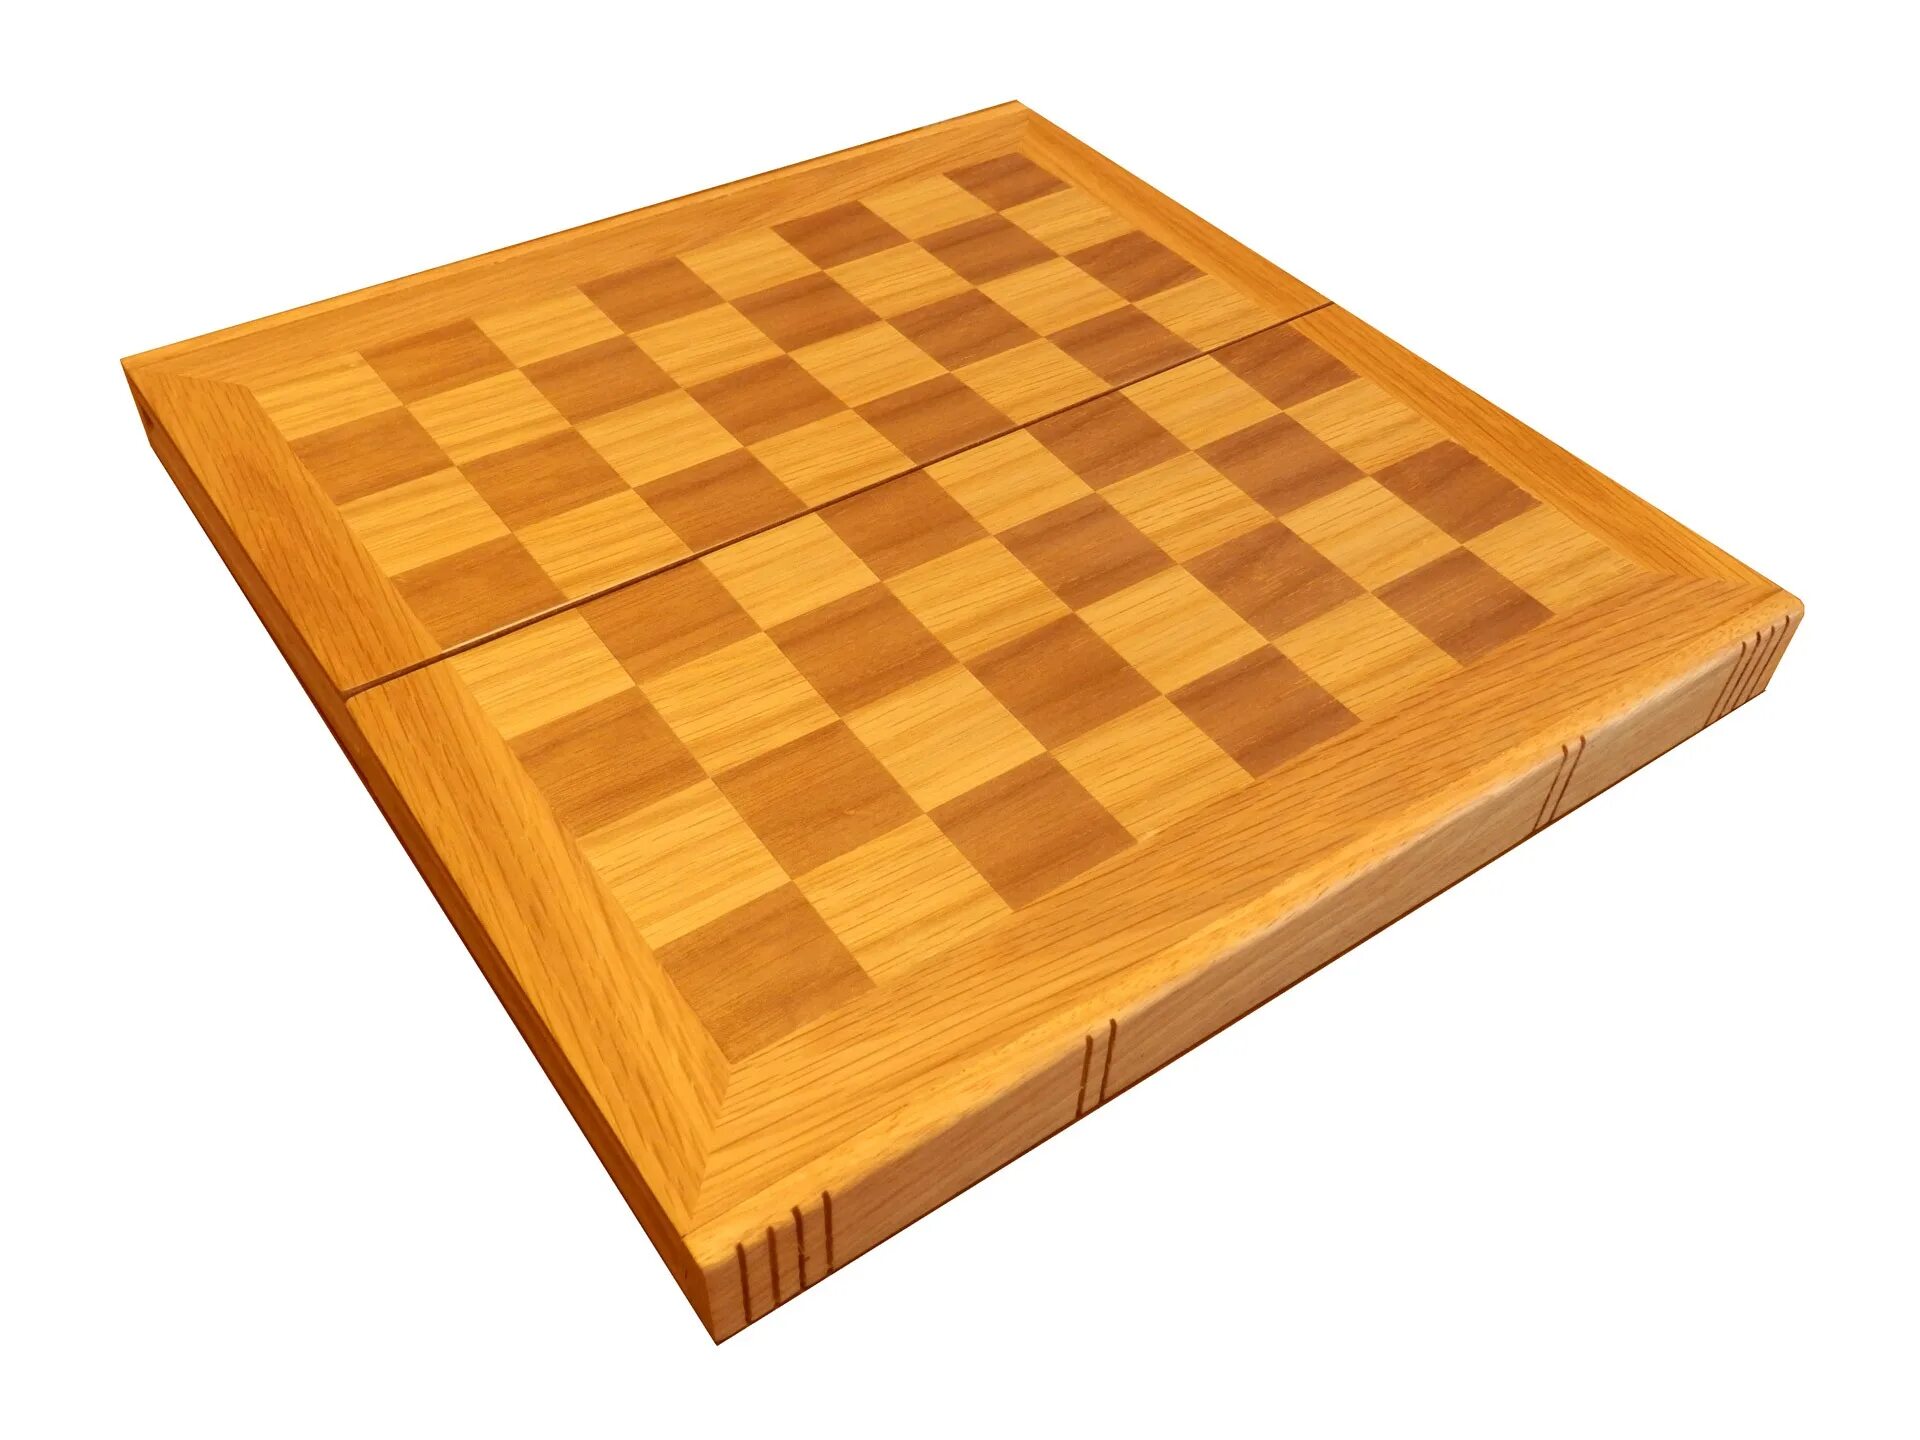 Создание шахматной доски. Шахматная доска. Шахматы доска. Разделочные доски шахматная доска. Шахматная доска 8х8.